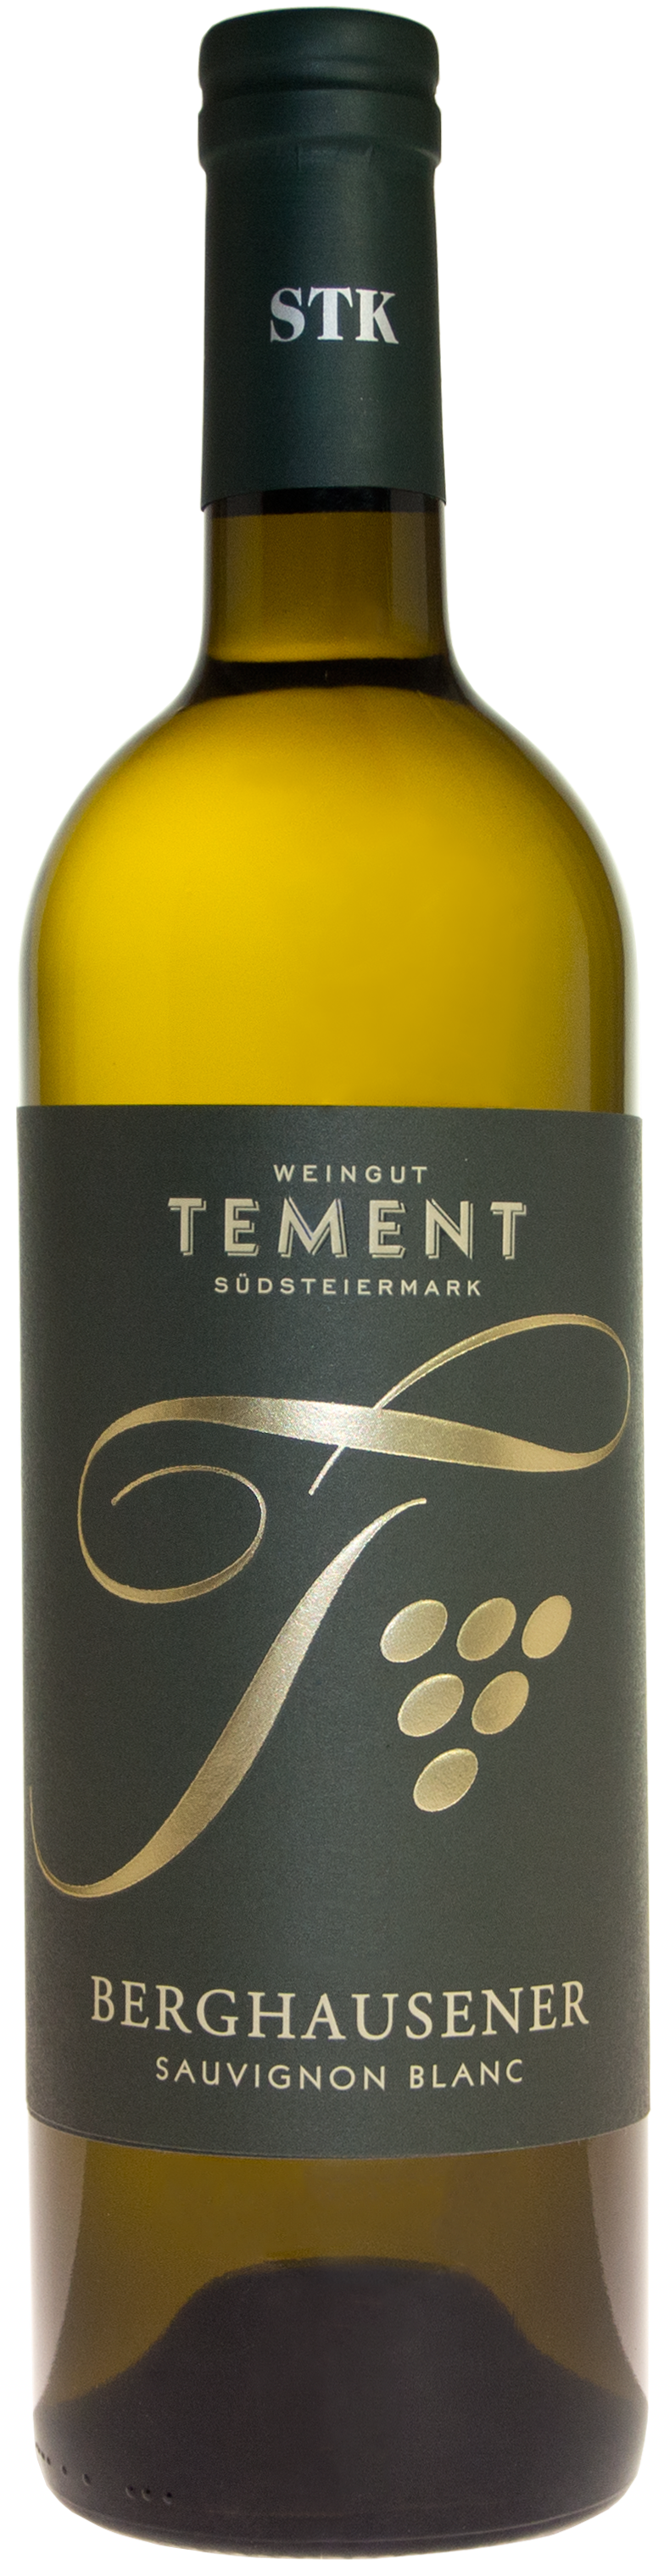 Tement, Berghausener Sauvignon Blanc, 2015